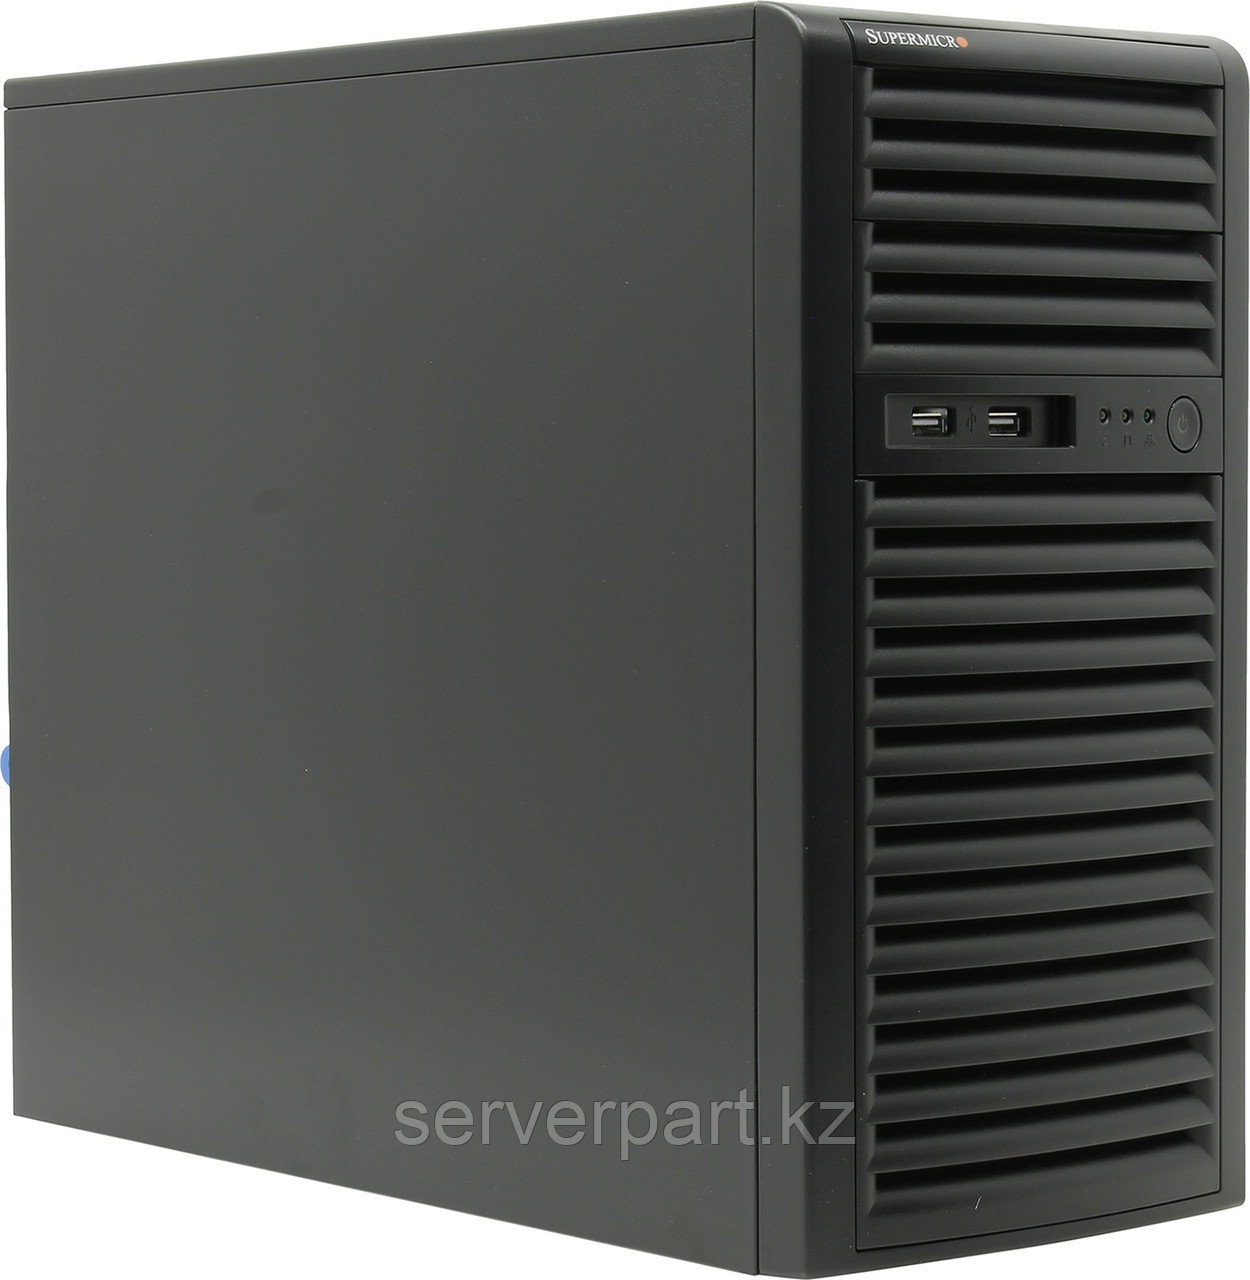 Сервер Supermicro 732-500B\X11SCL-F Tower 4LFF/6-core intel xeon E-2136 3.3GHz/no RAM/no HDD nhp/RAID